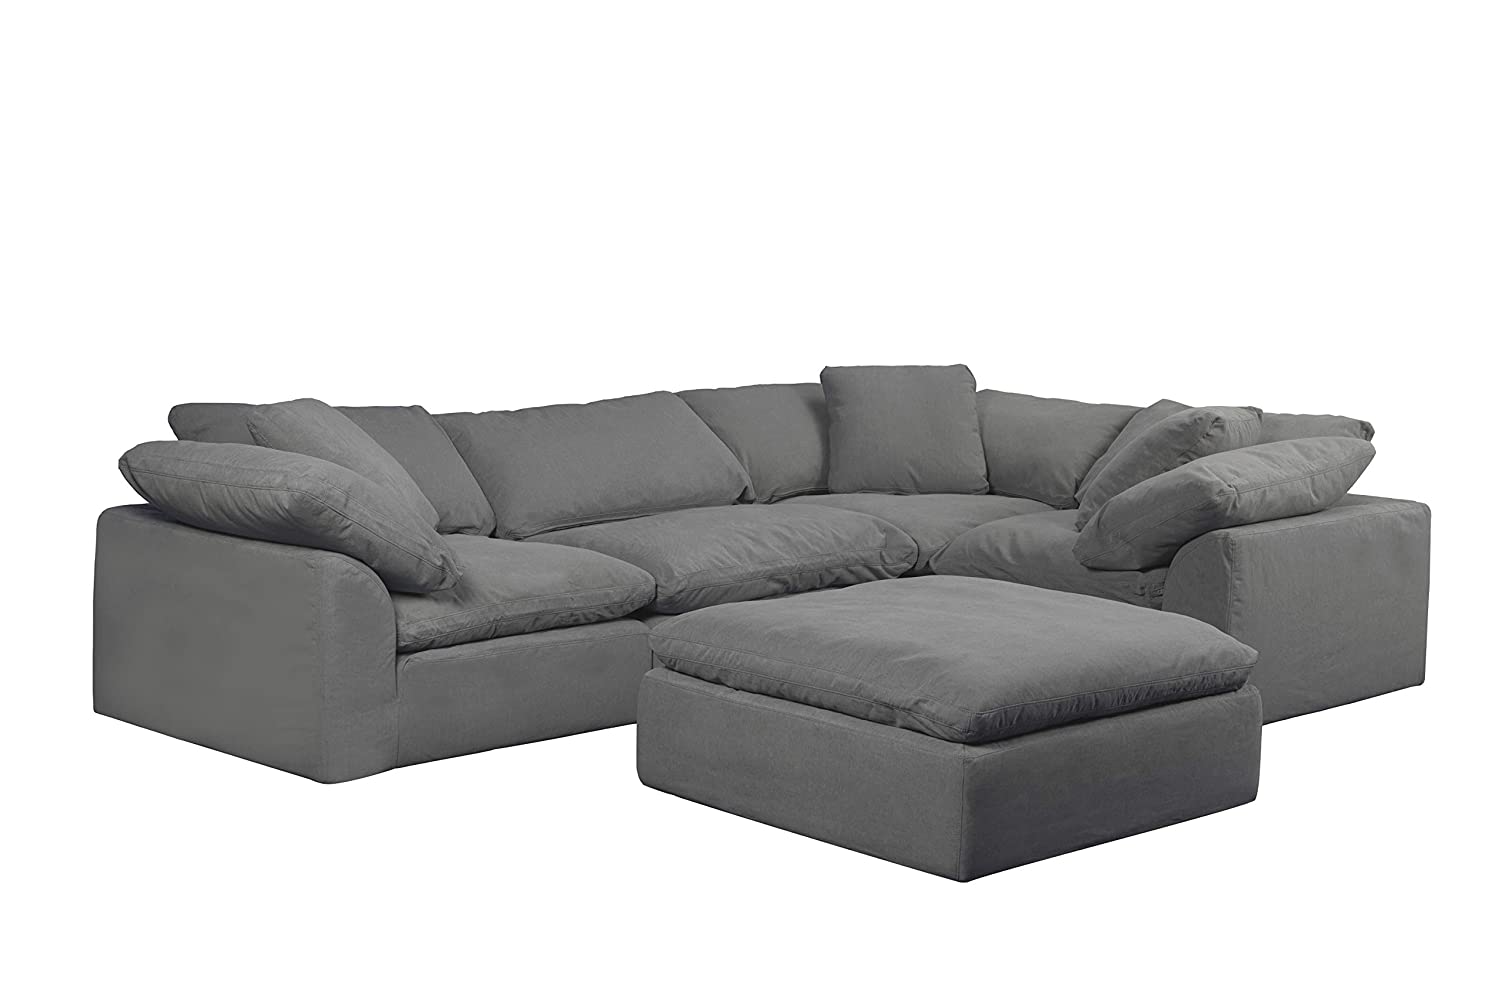 Sunset Trading Cloud Puff 5 Piece Modular Performance Gray Sectional Slipcovered Sofa